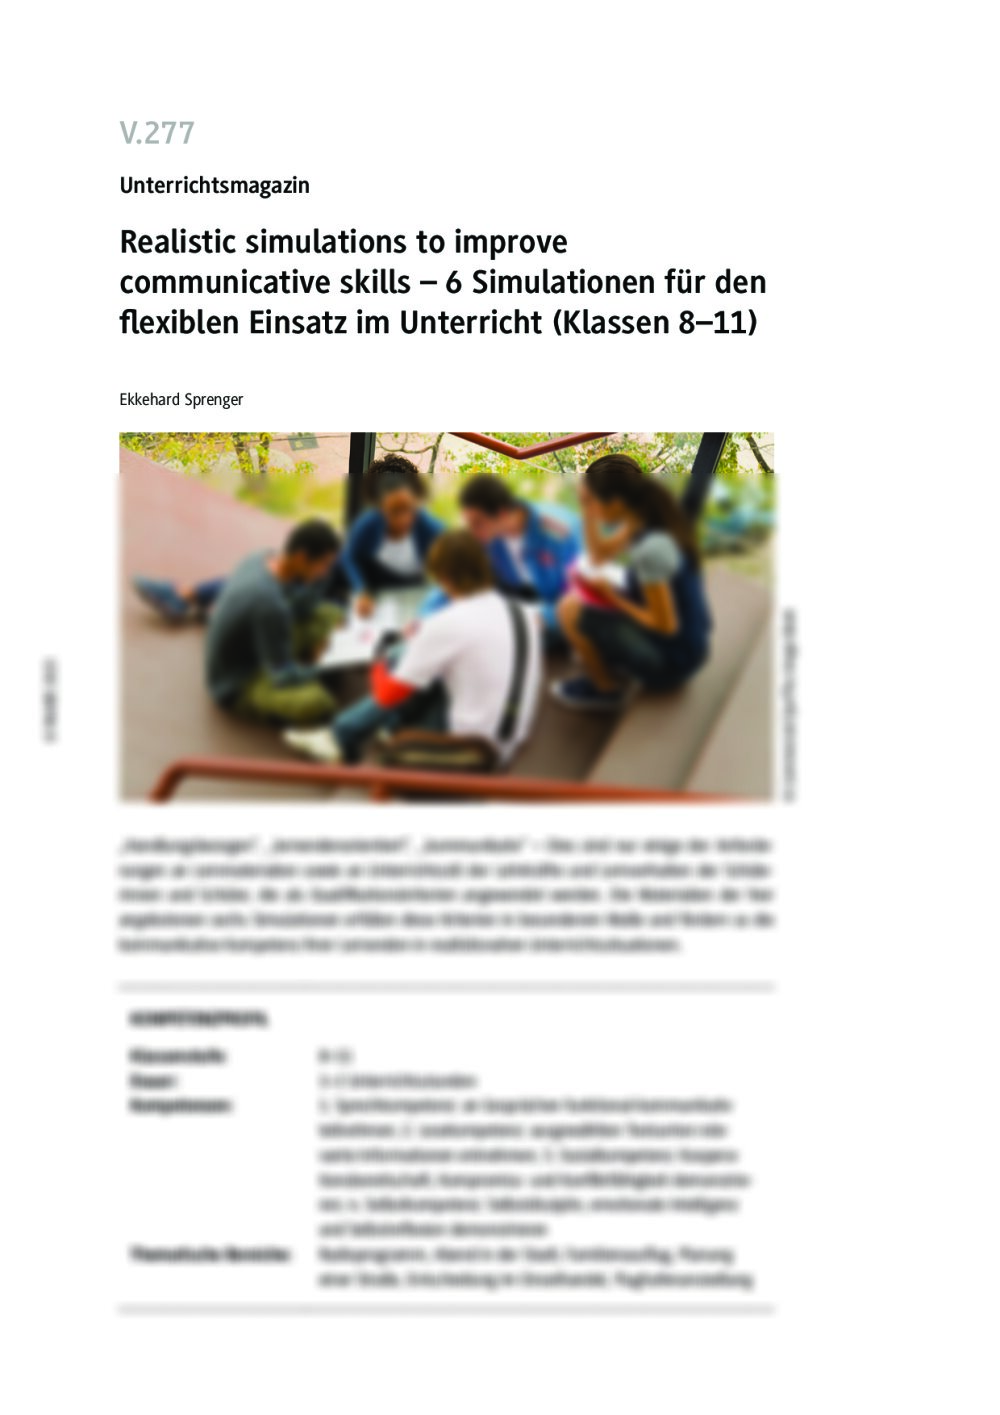 Realistic simulations to improve communicative skills - Seite 1